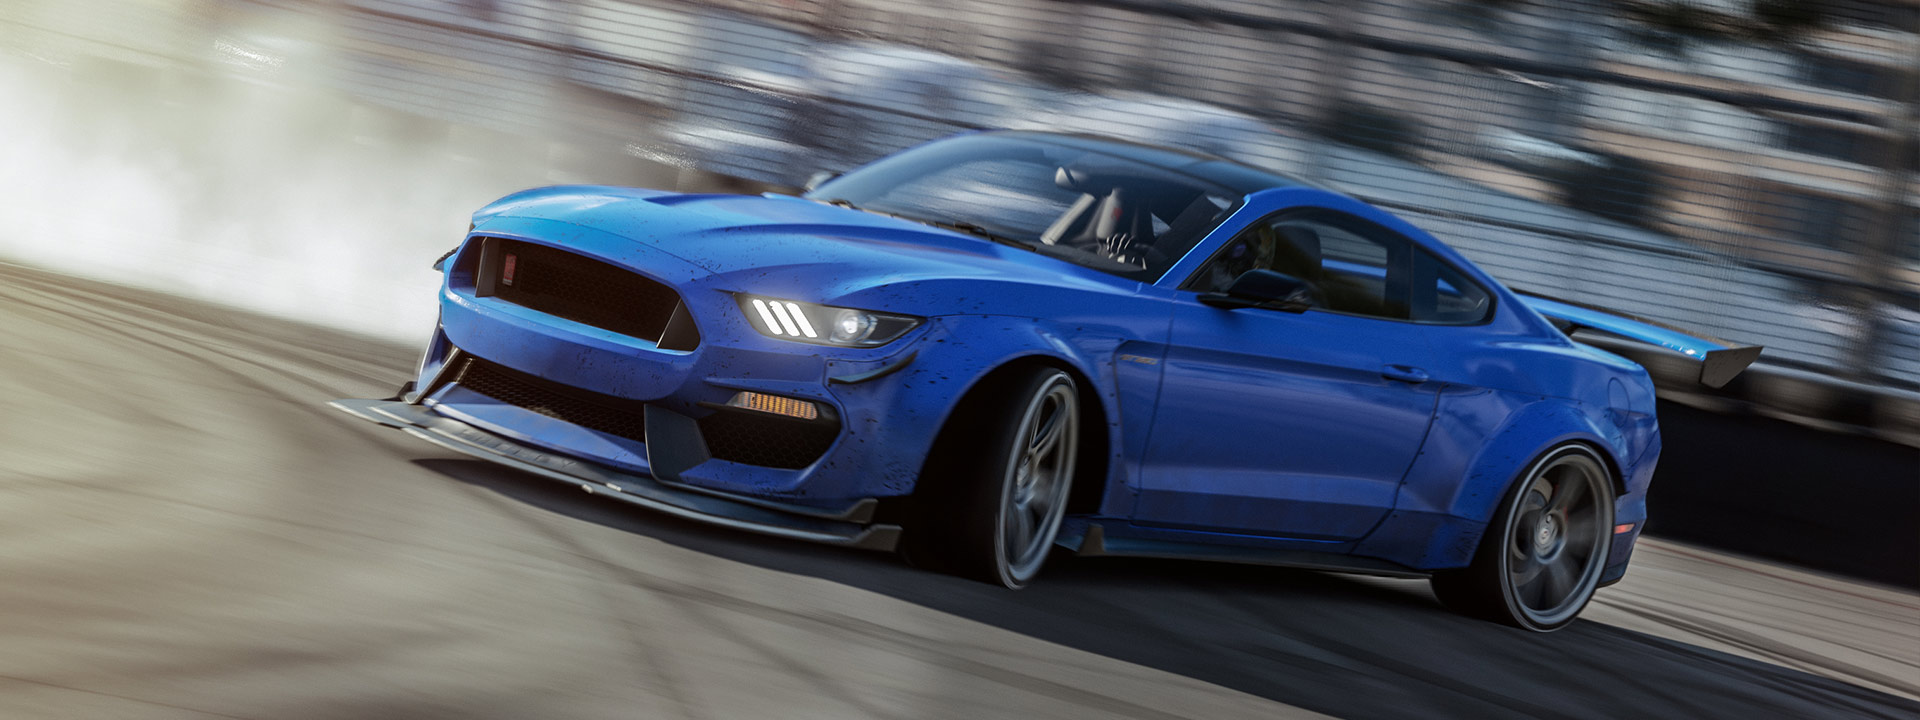 Forza Motorsport 7 Para Xbox One Y Windows 10 Xbox